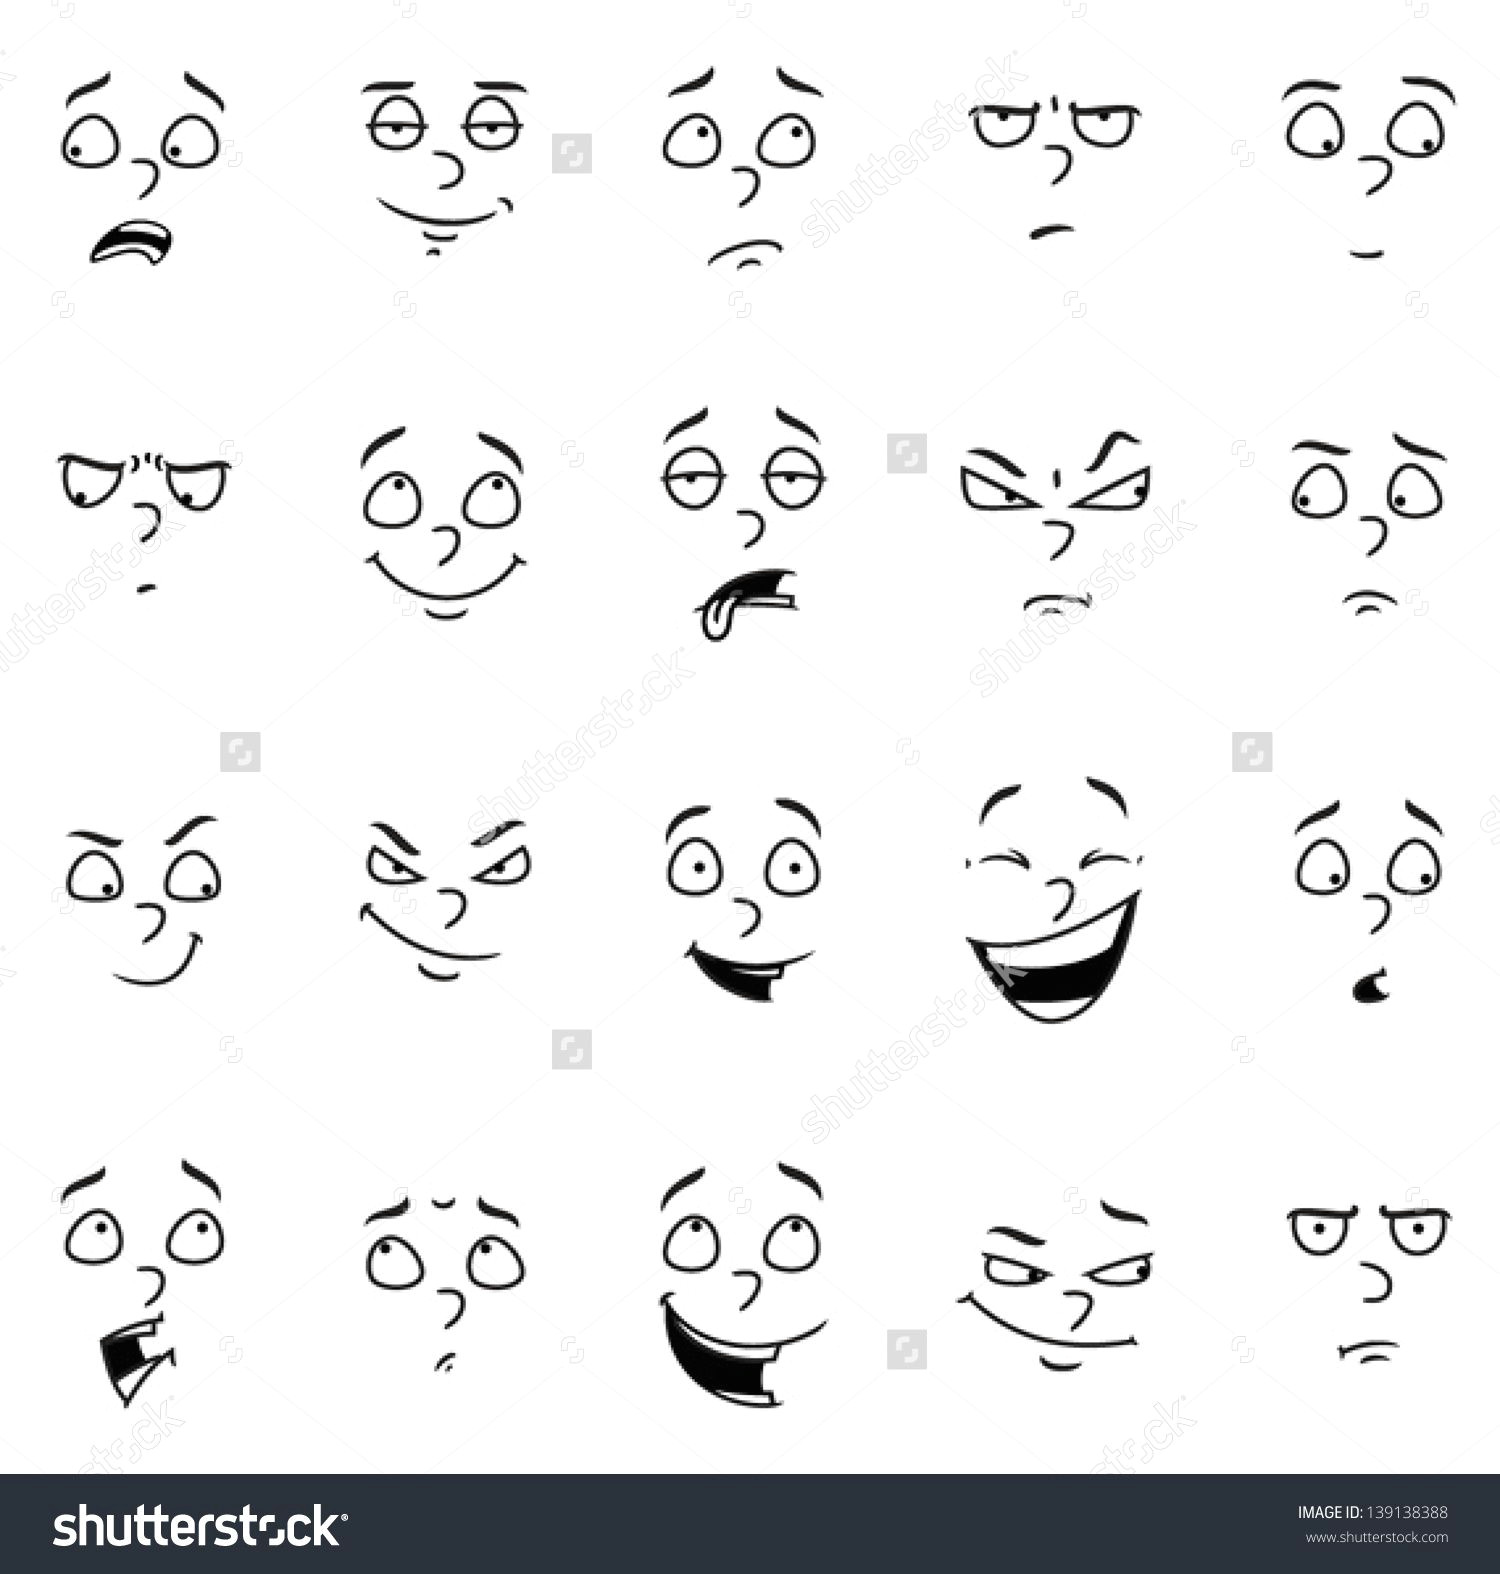 Easy Drawing Of Eid Simple Woman Cartoon Facial Expressions Buscar Con Google Art